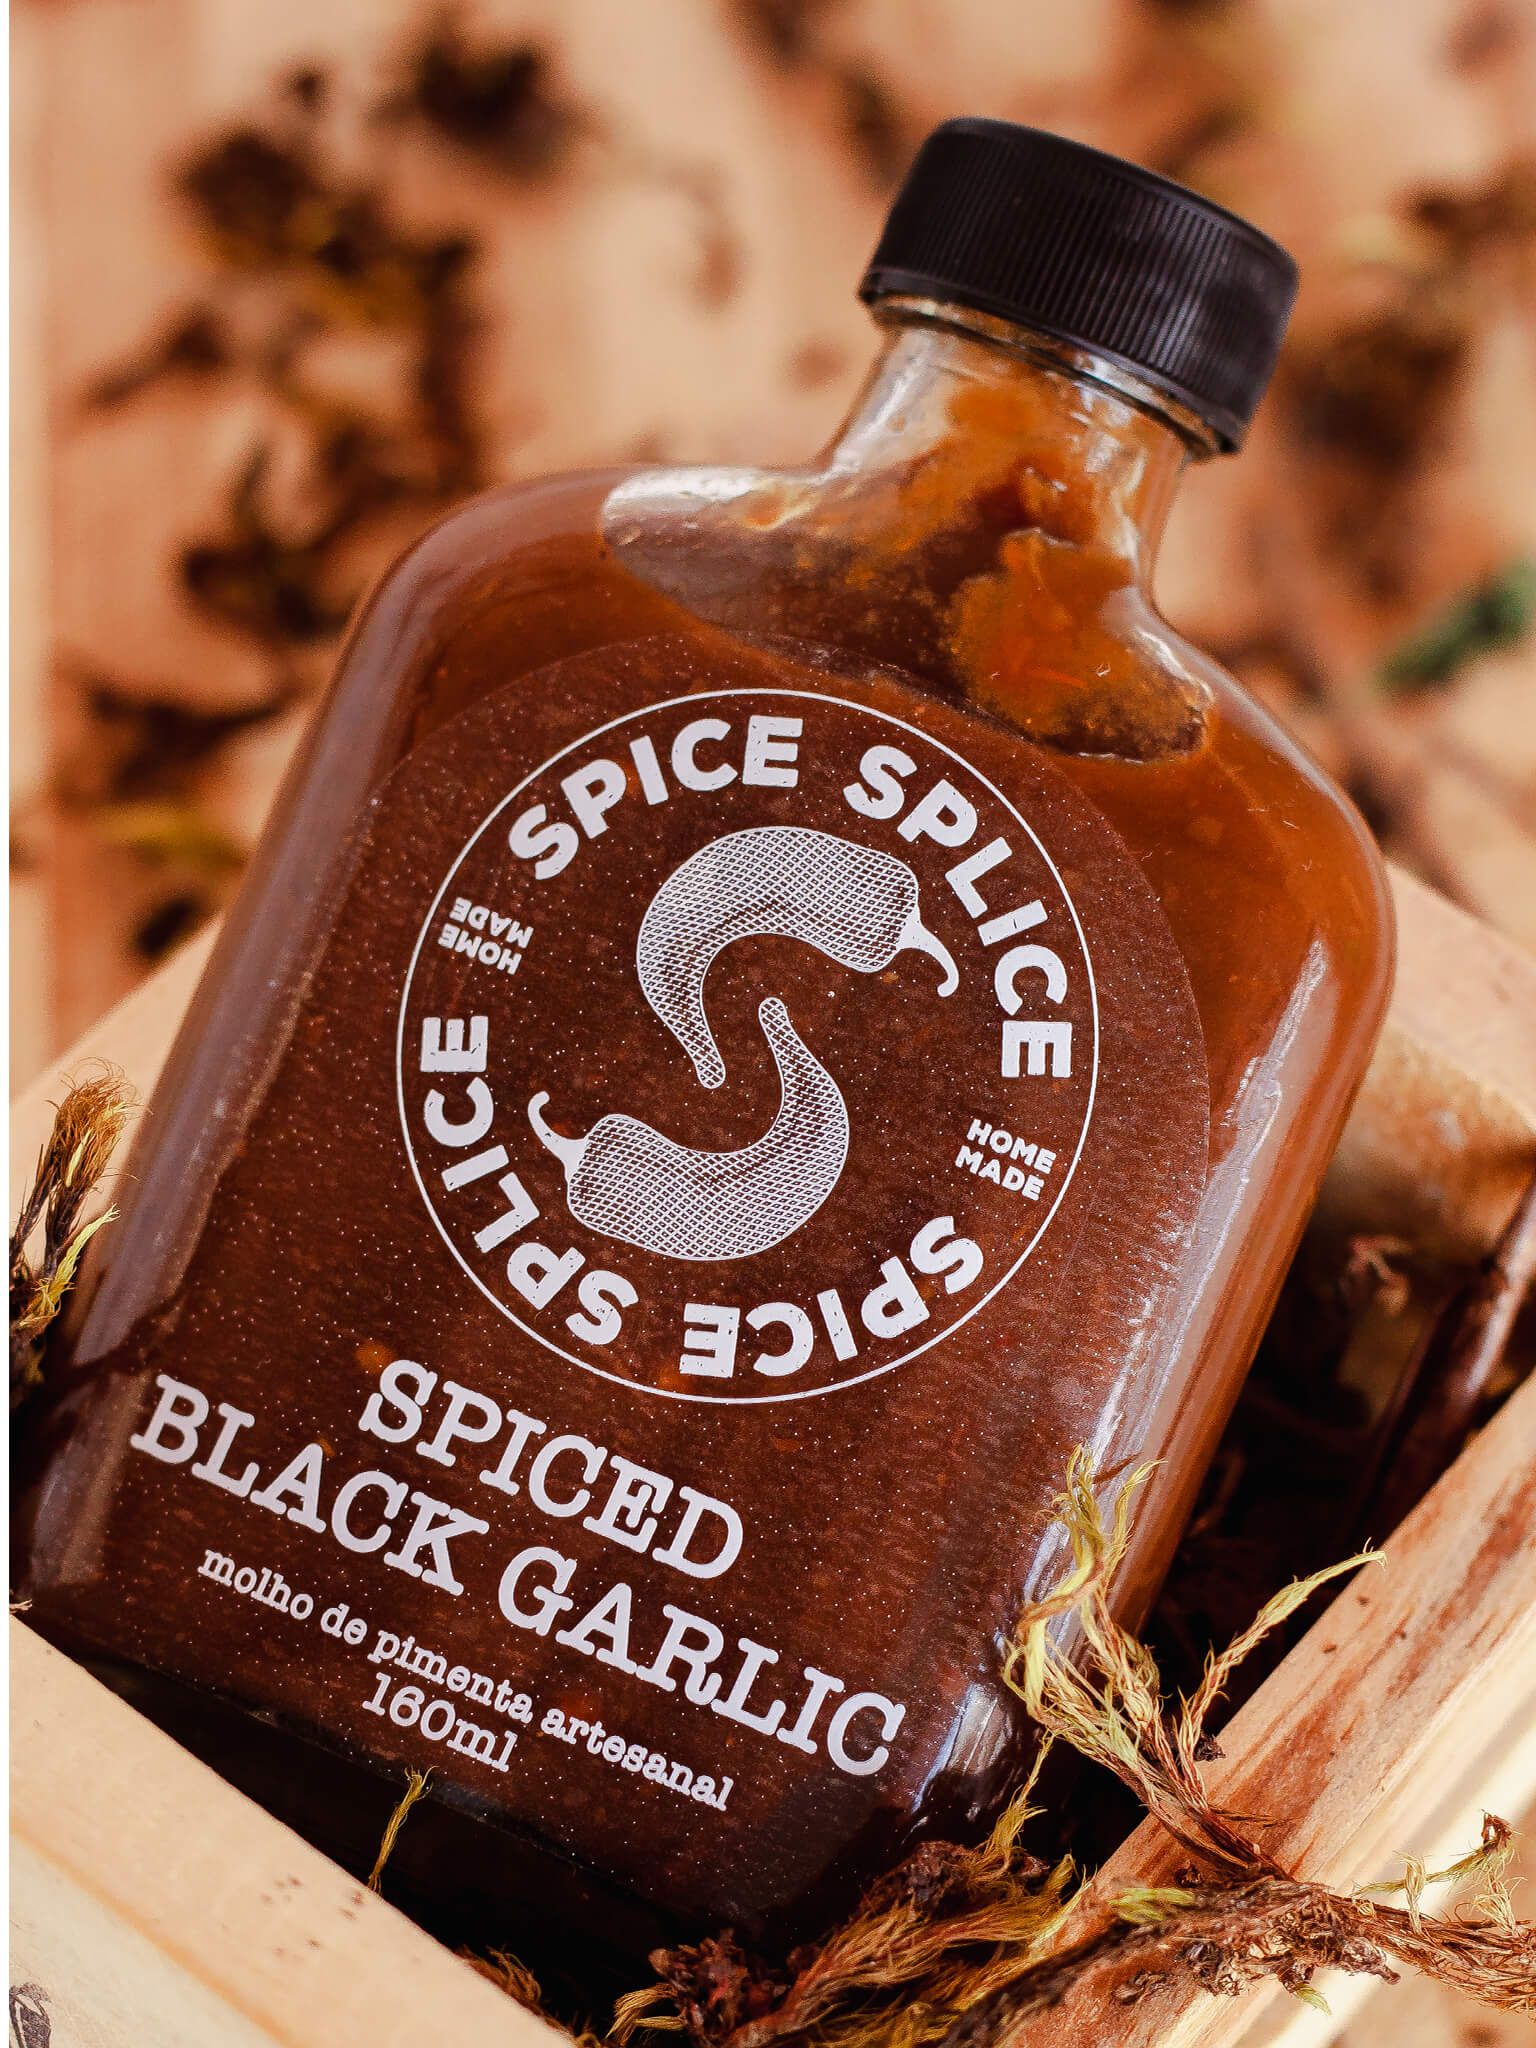 Spiced Black Garlic